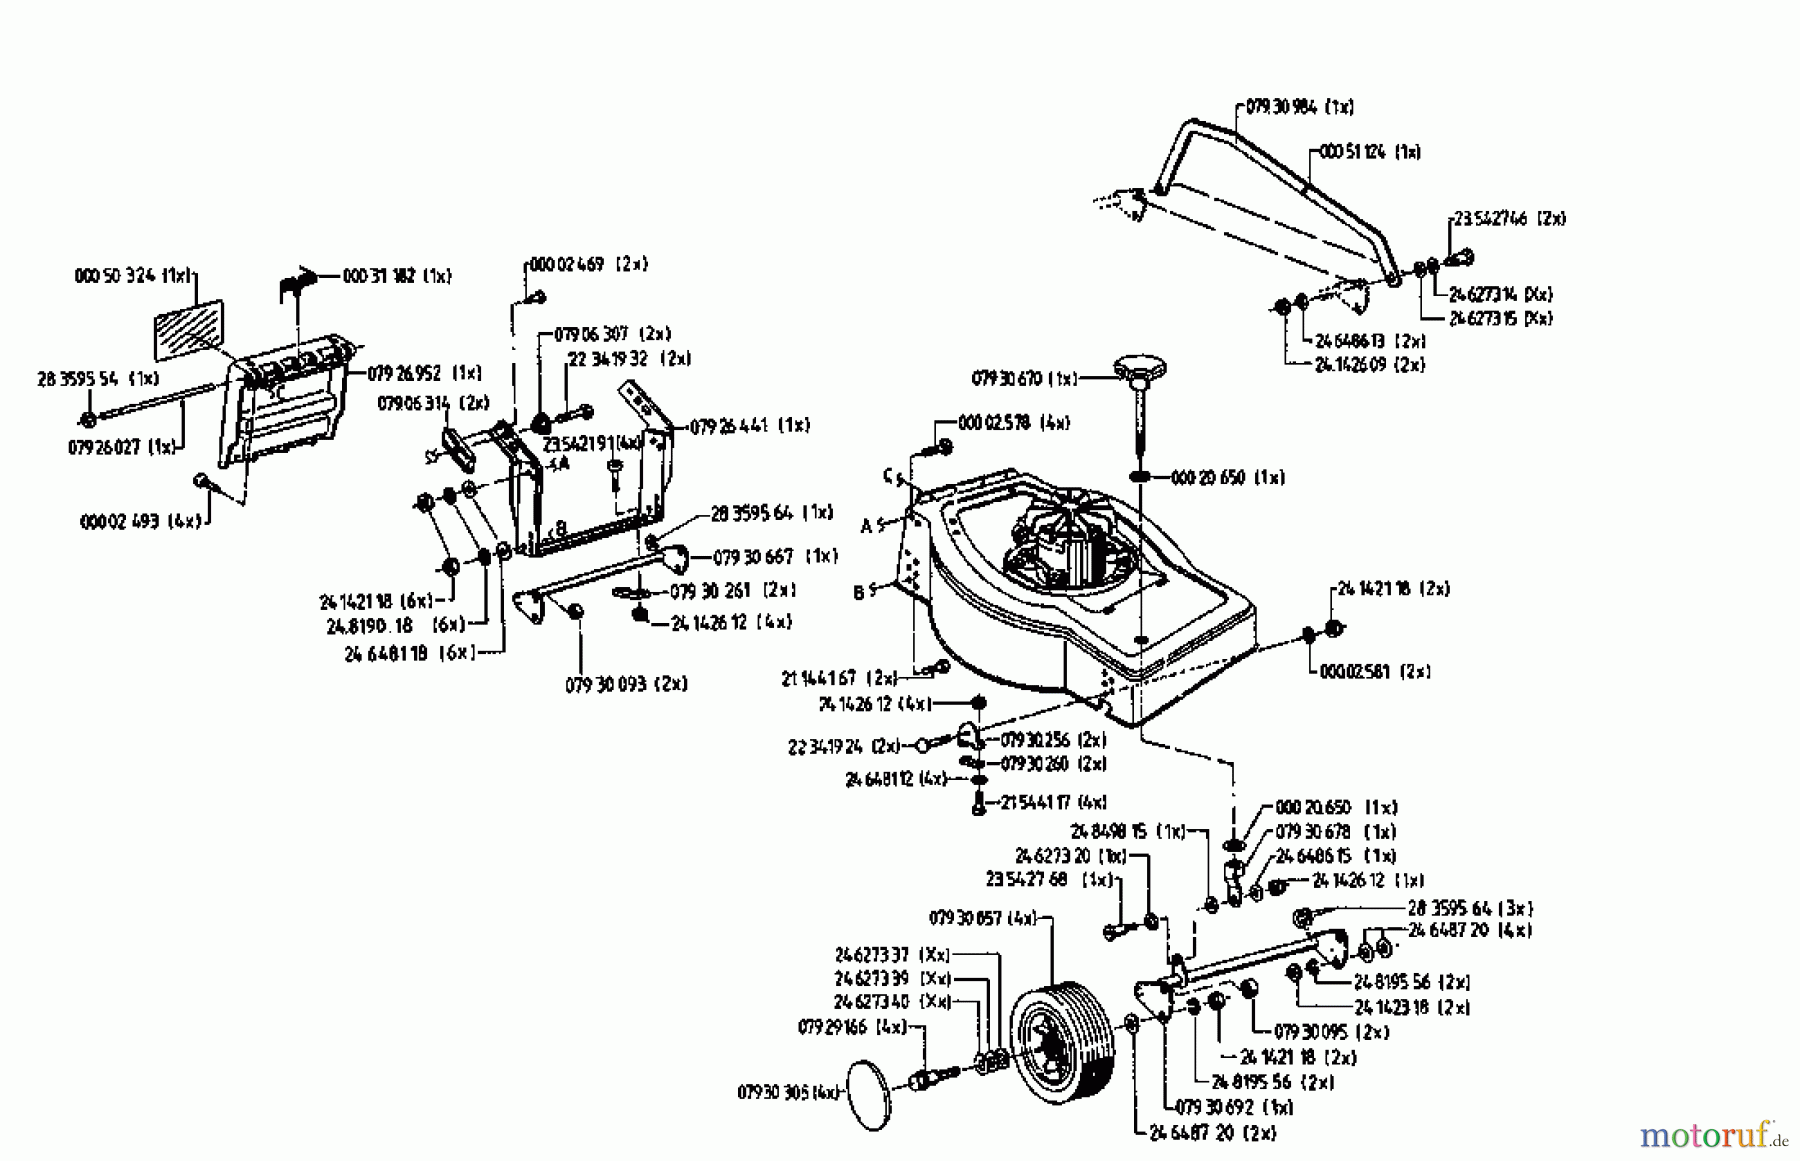  Golf Electric mower 445 HLES 04032.01  (1996) Basic machine